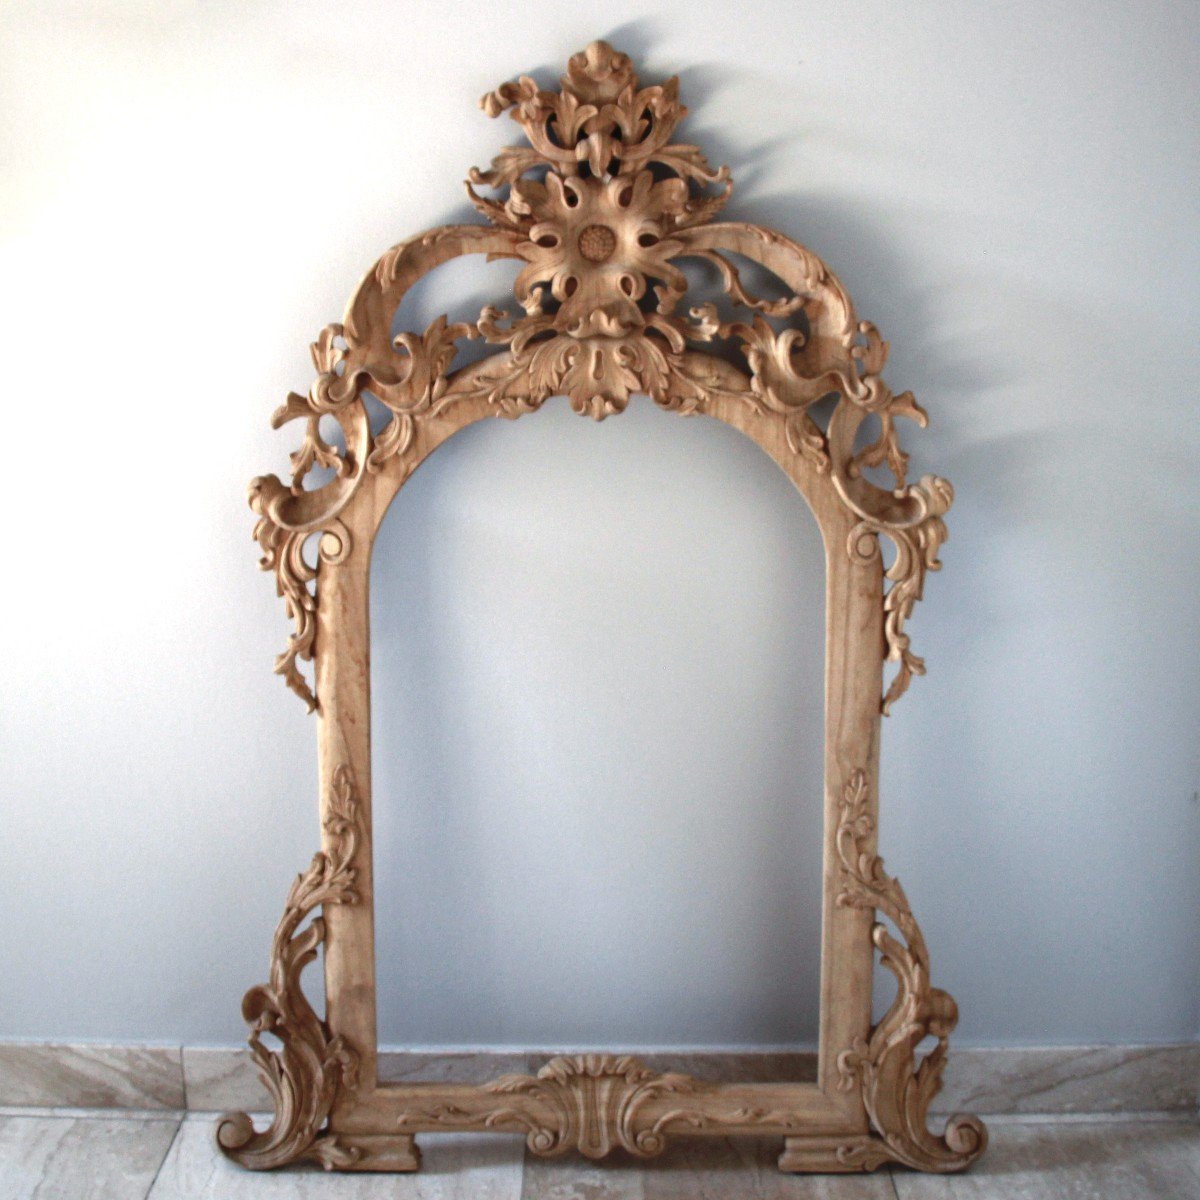 Regency Style Mirror Frame In Untreated Natural Wood